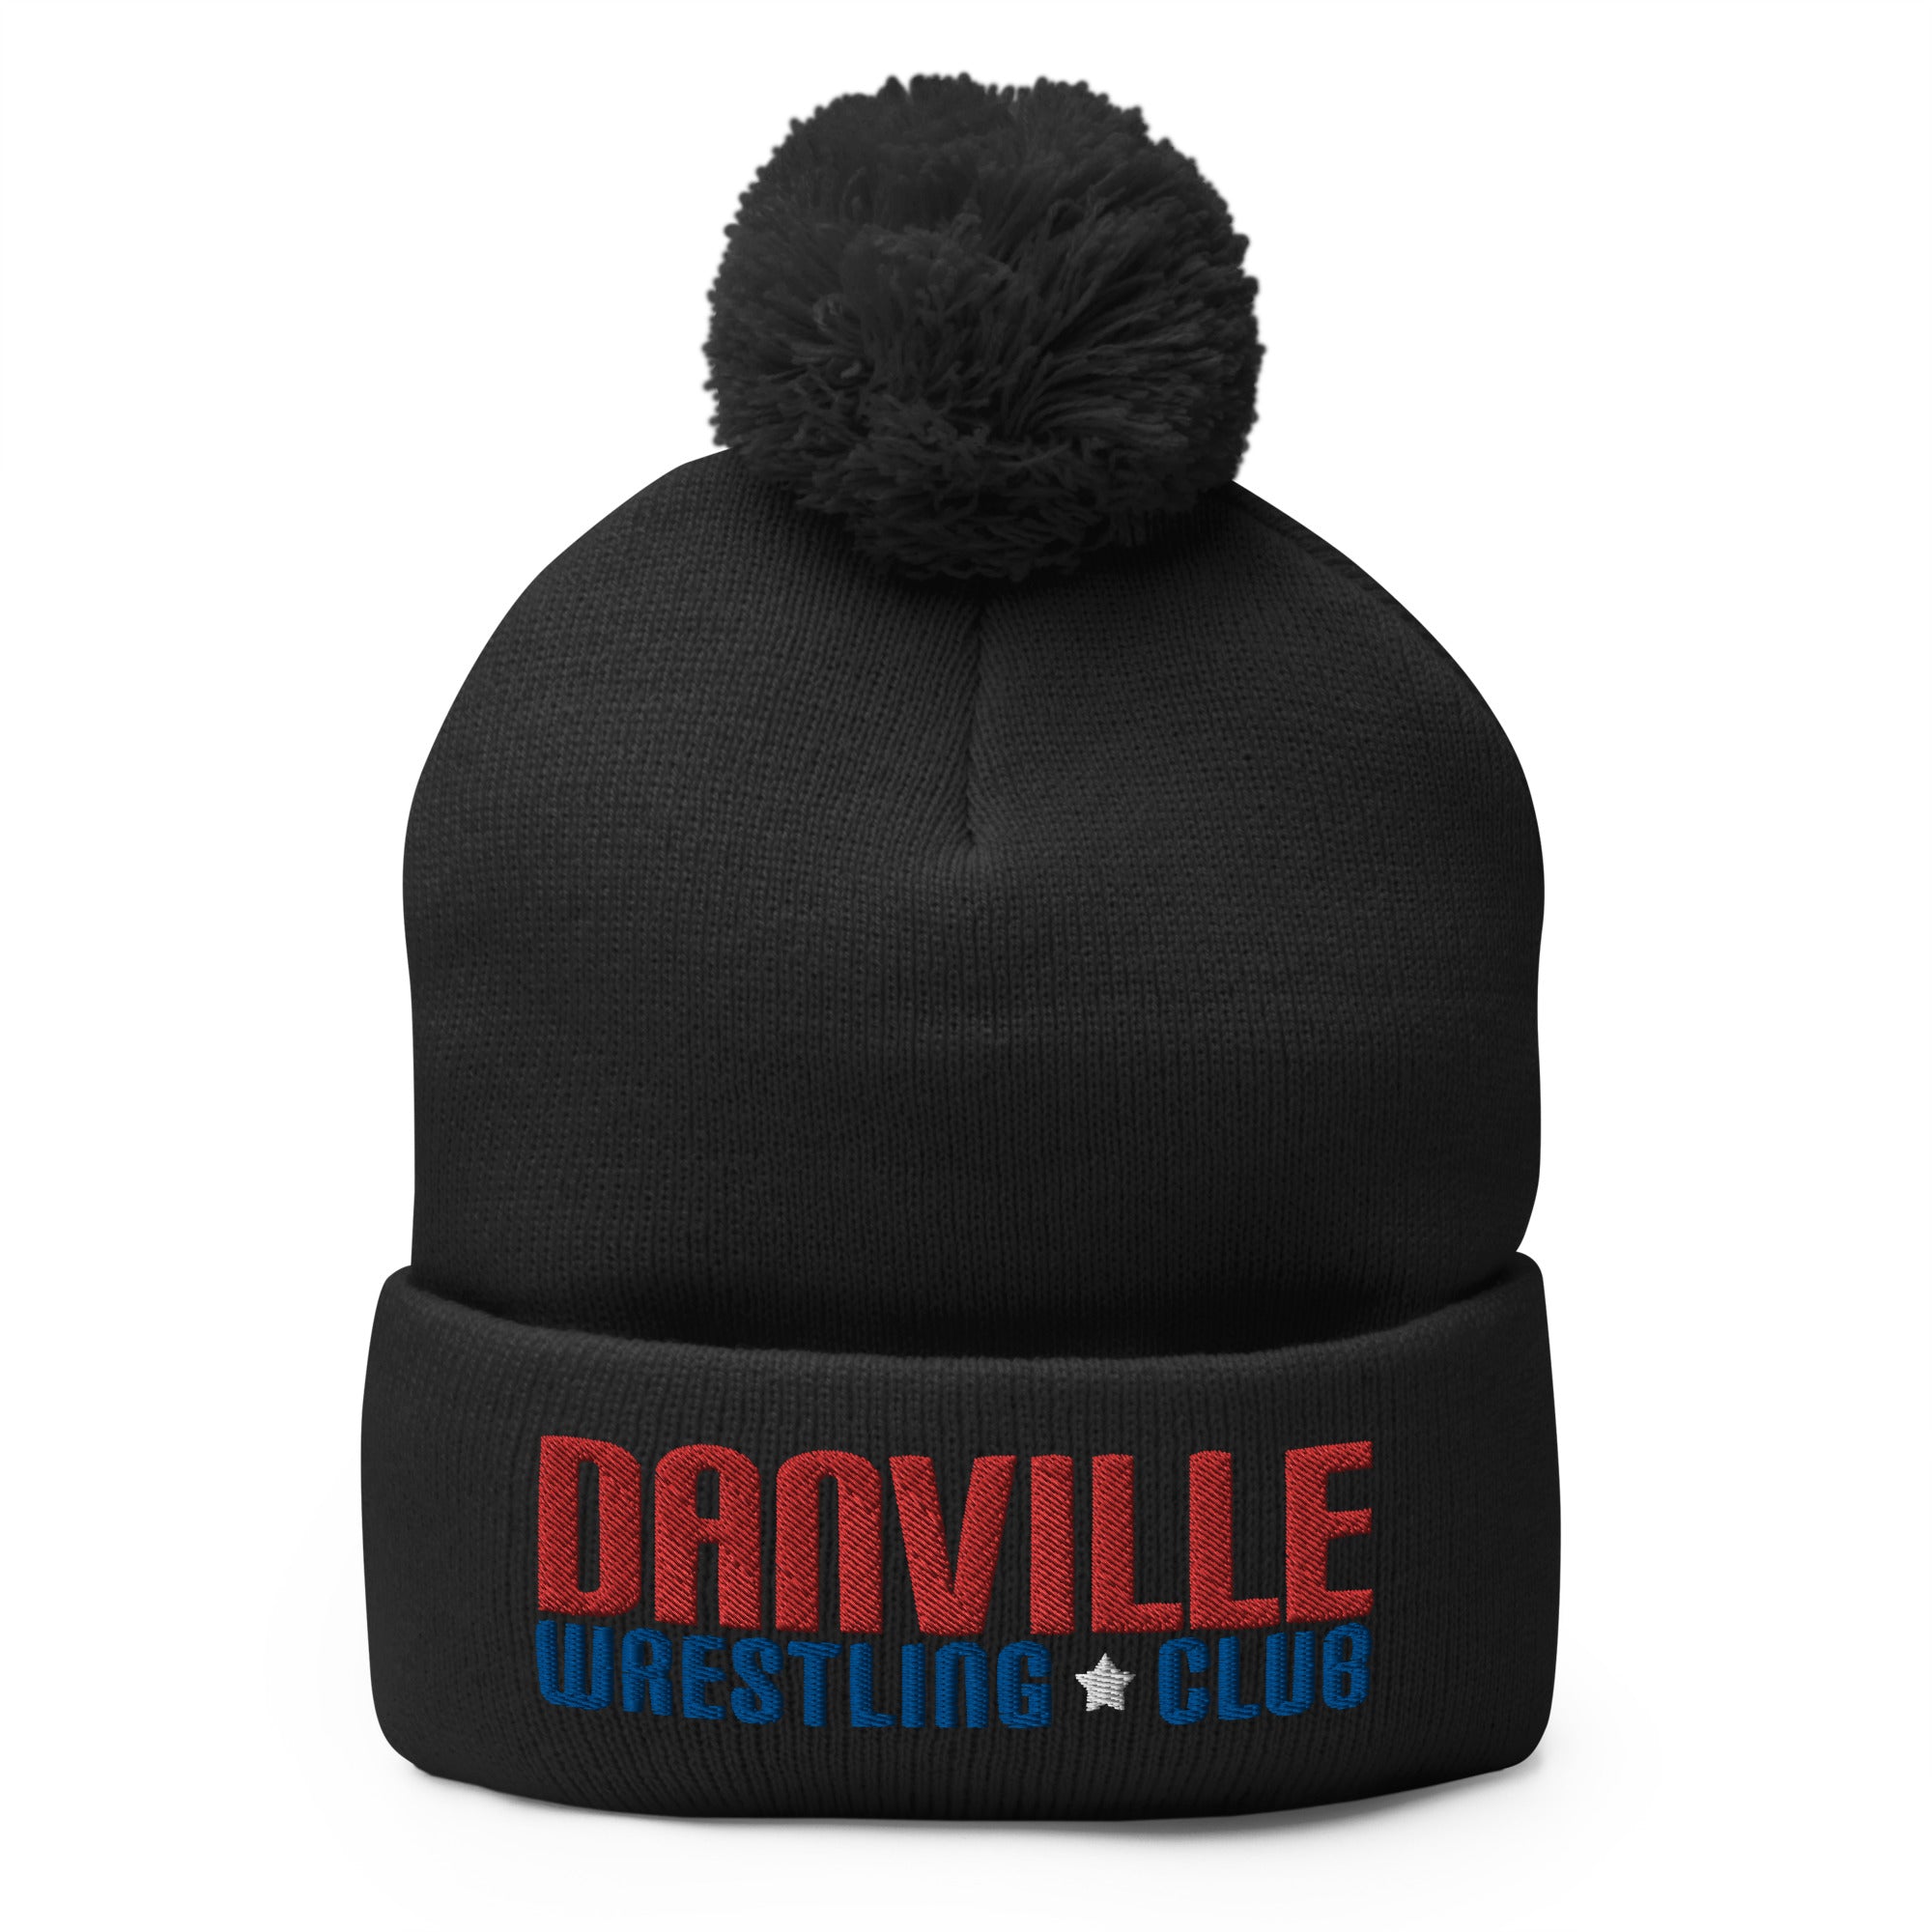 Danville Wrestling Club Pom-Pom Knit Cap